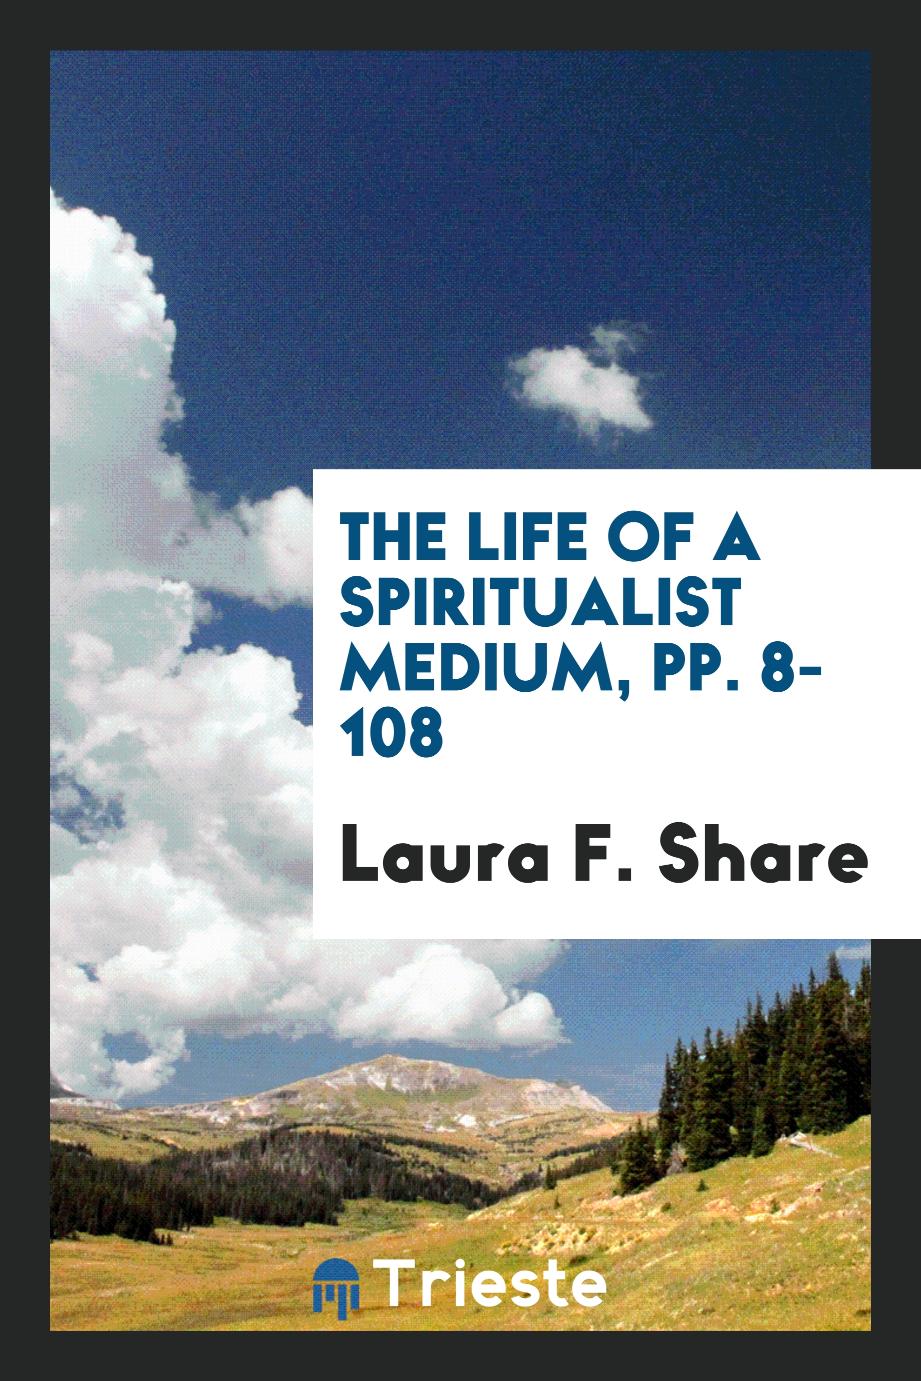 The Life of a Spiritualist Medium, pp. 8-108